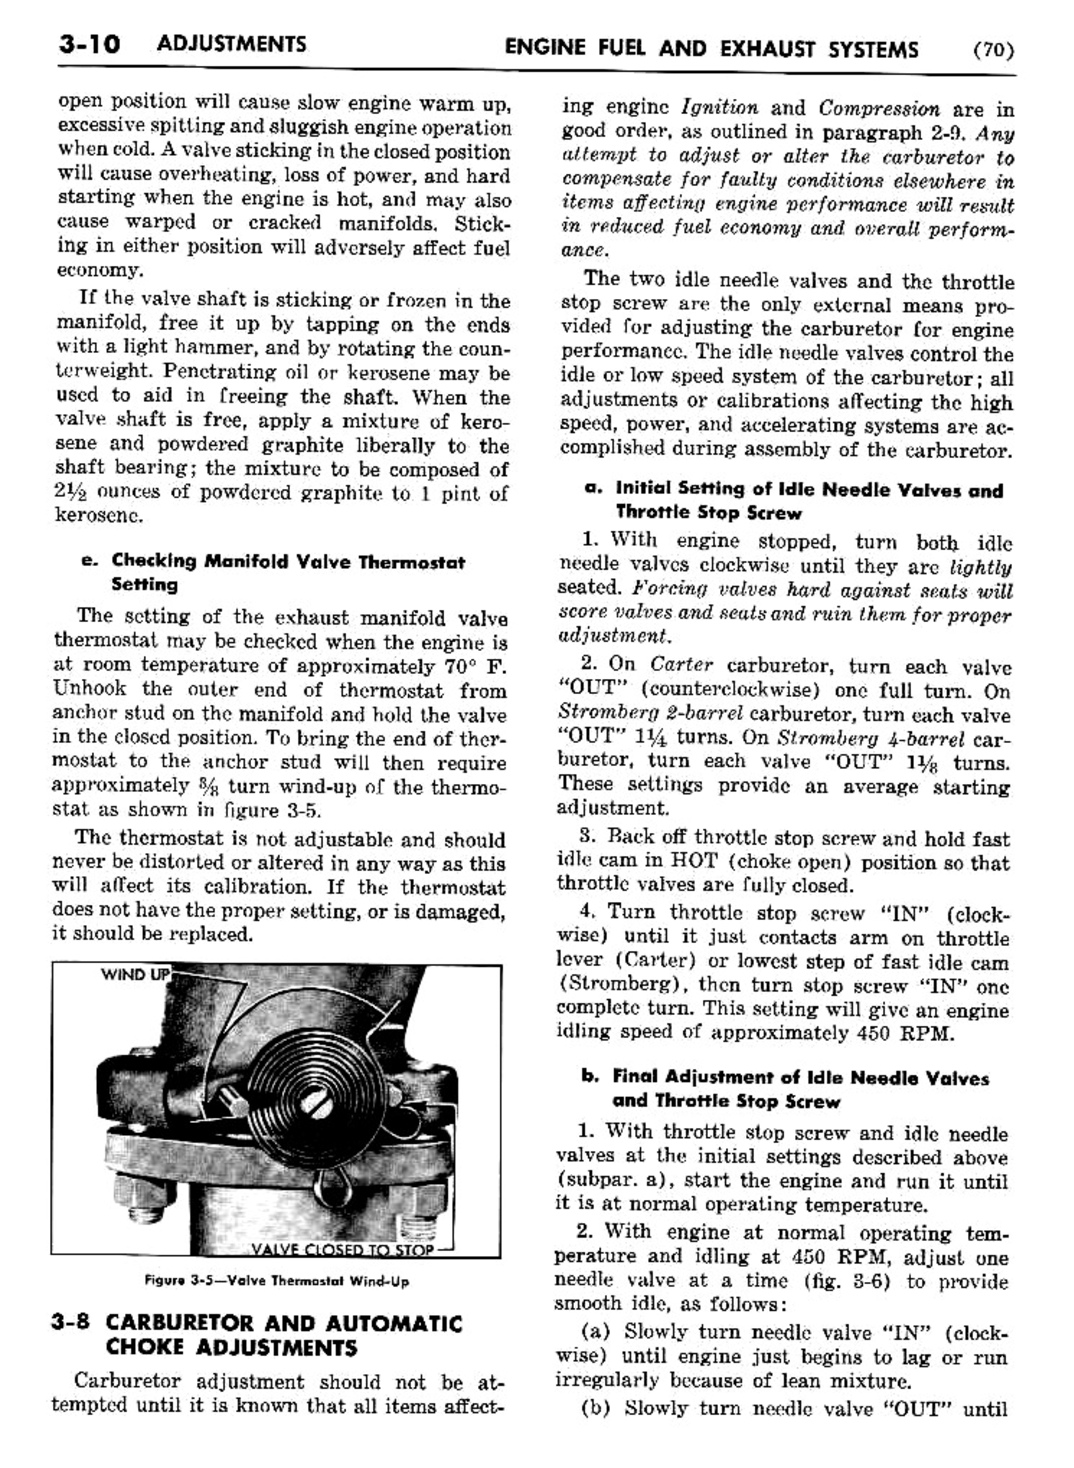 n_04 1954 Buick Shop Manual - Engine Fuel & Exhaust-010-010.jpg